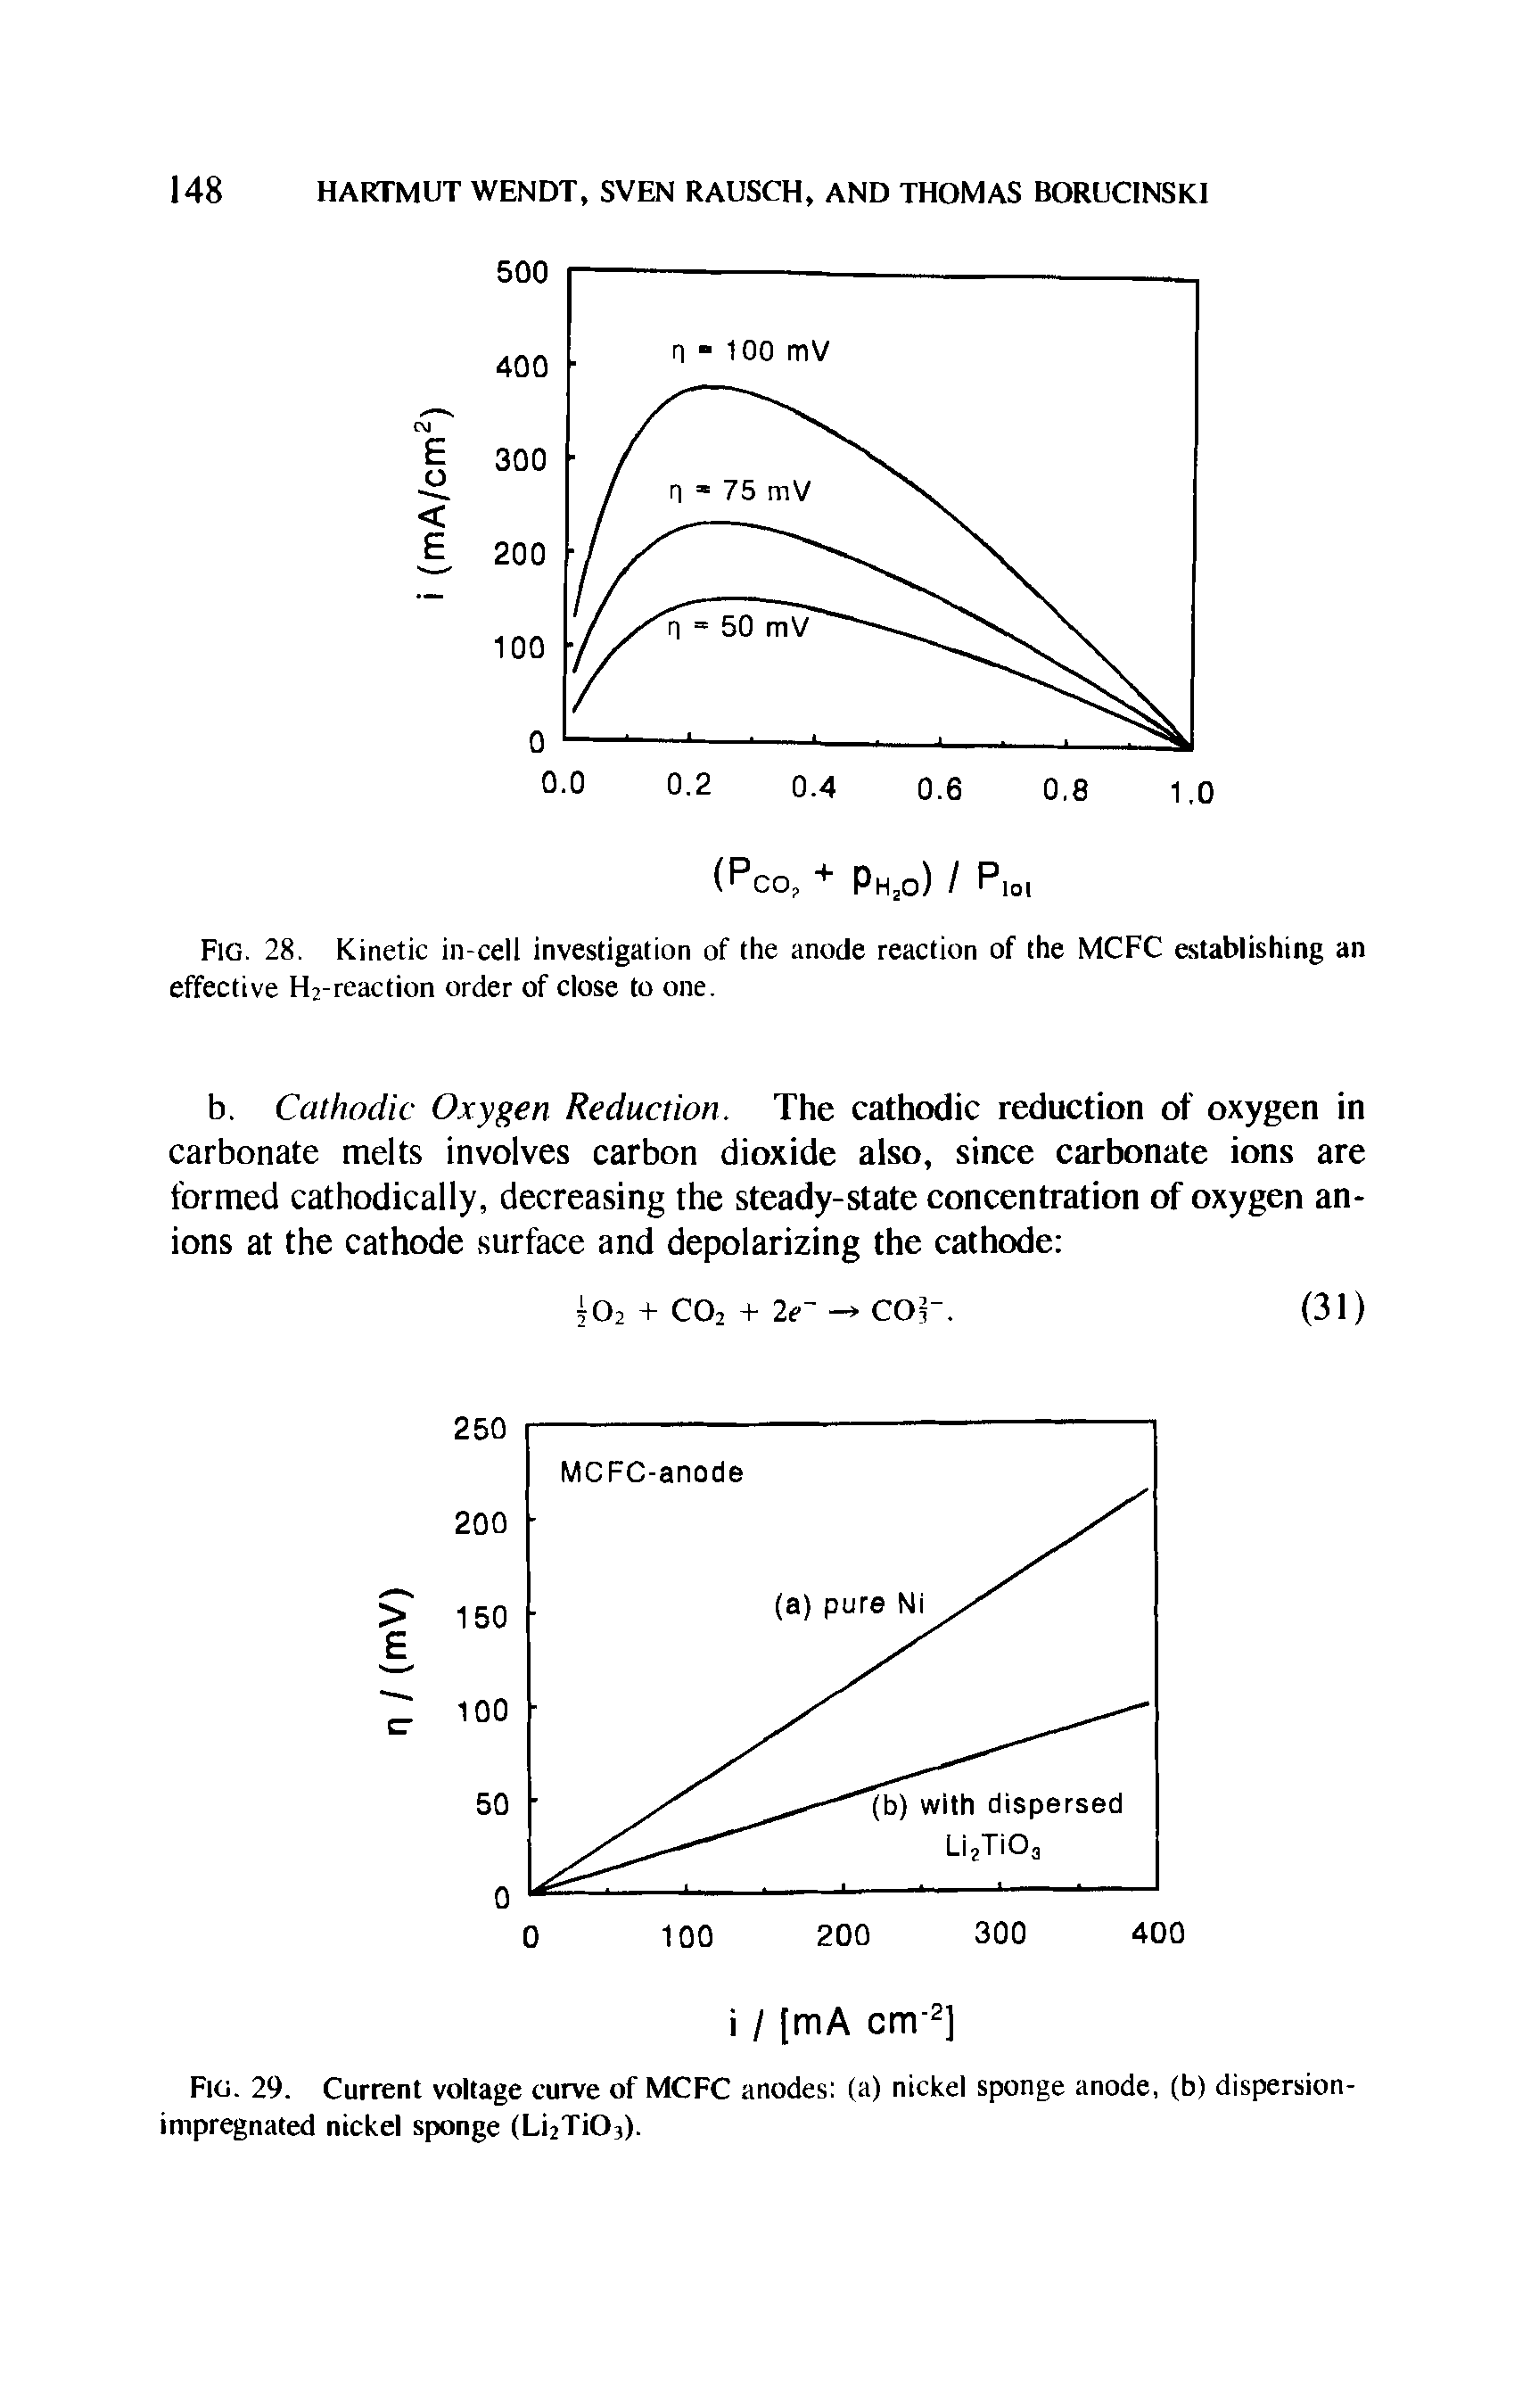 Fig. 29. Current voltage curve of MCFC anodes (a) nickel sponge anode, (b) dispersion-impregnated nickel sponge (Li2Ti03).